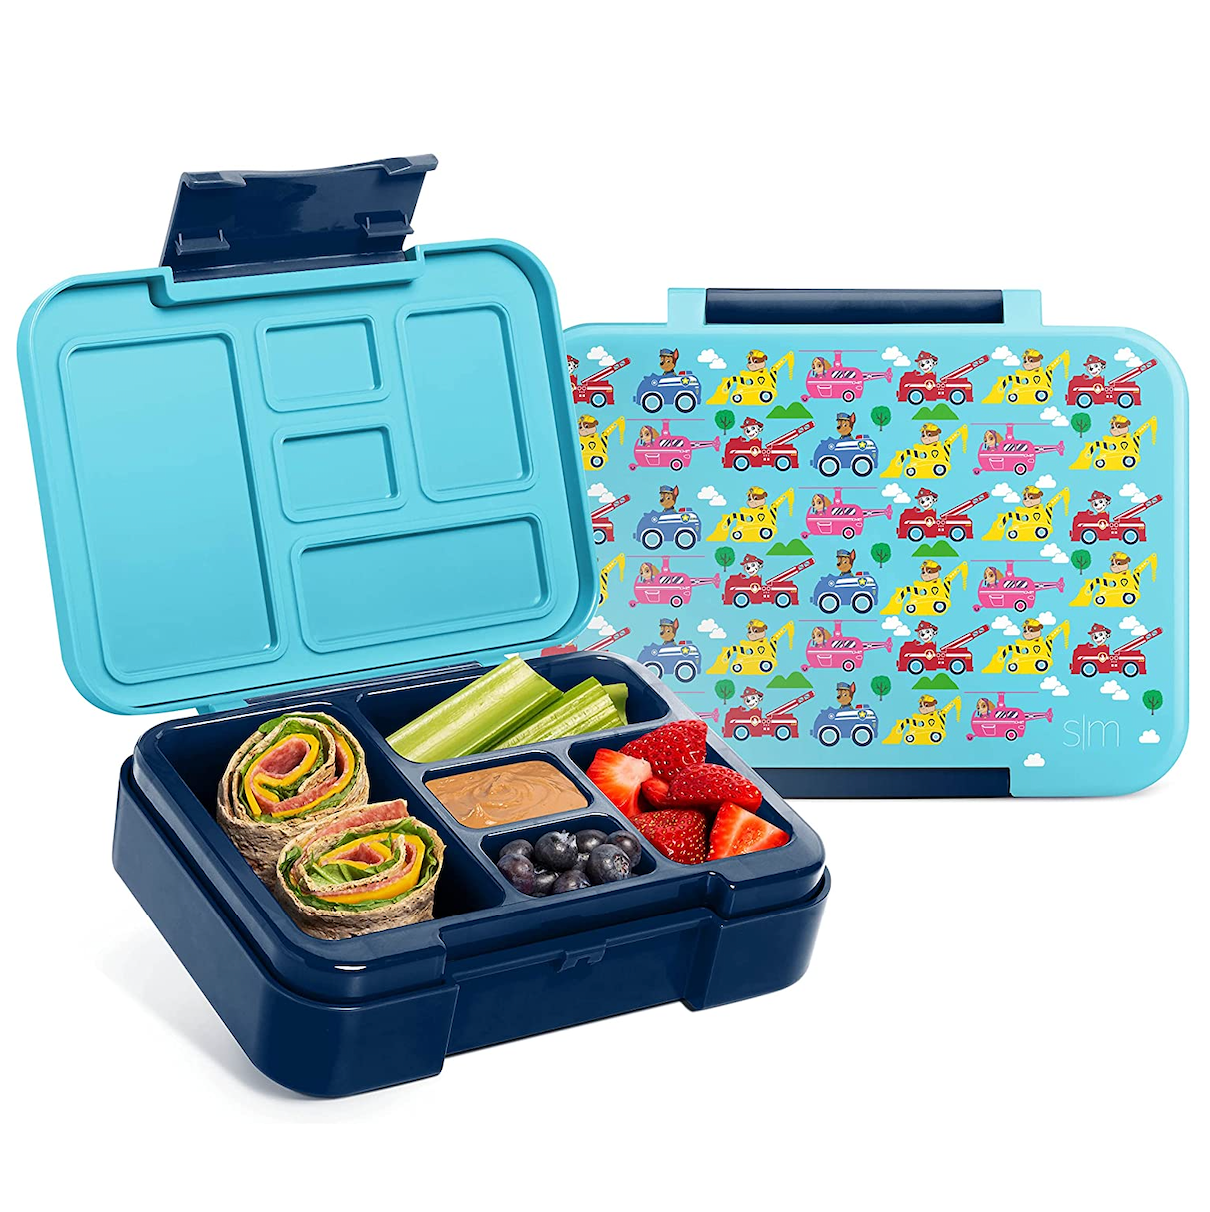 MetaKeshi - The Infinity Saga Mini Lunchbox Set